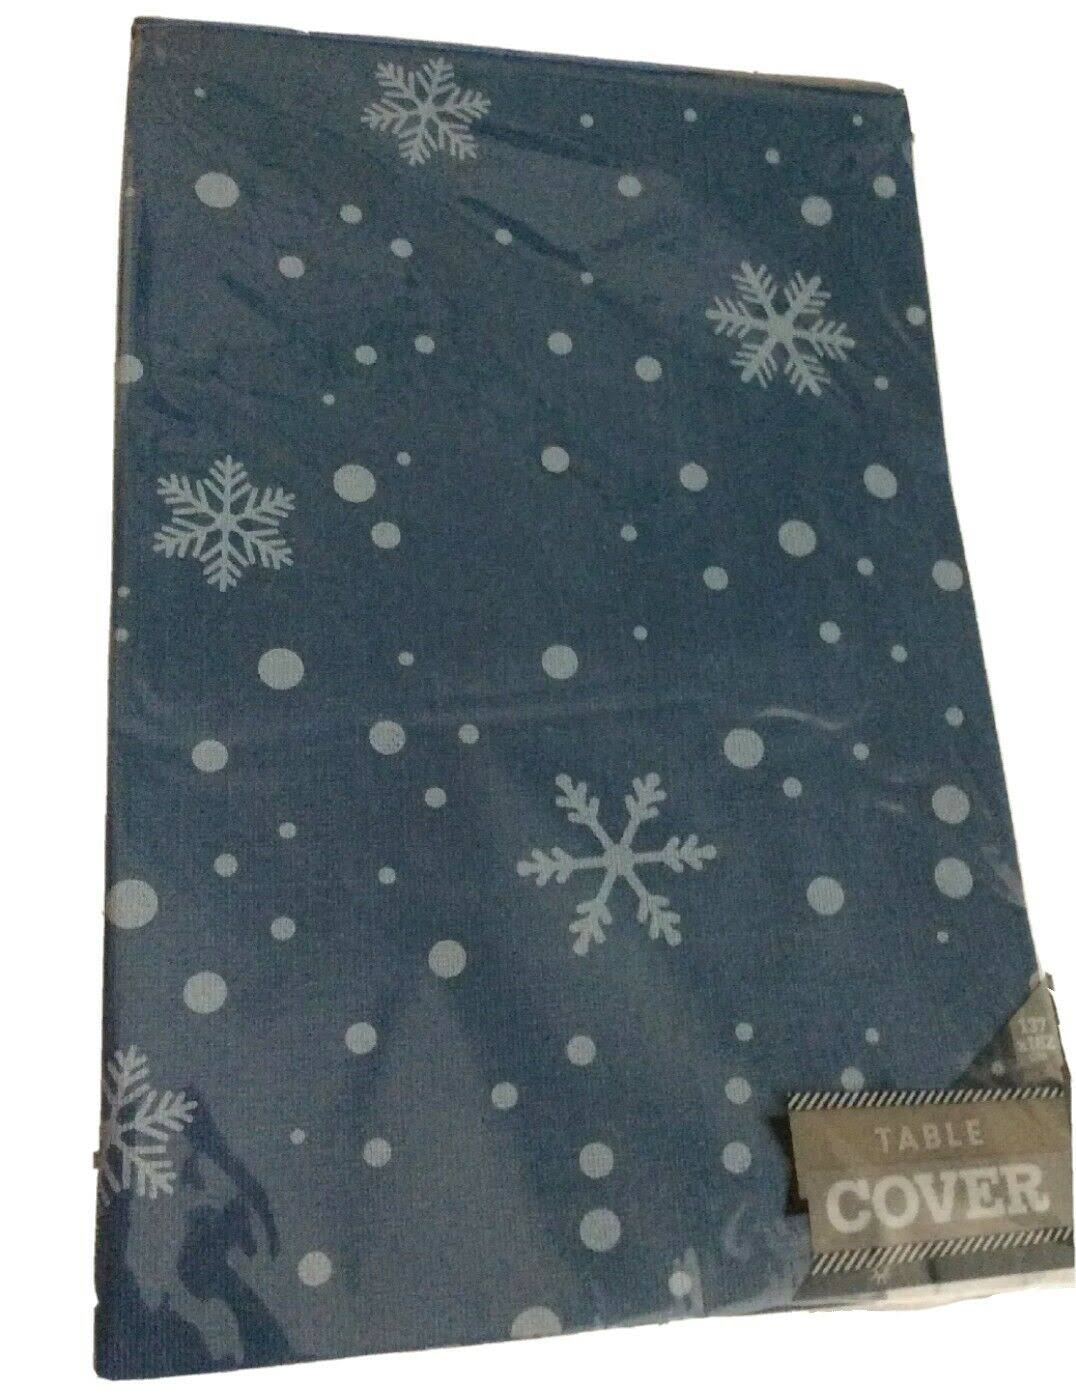 Blue Snowflake Tablecloth Christmas Decorative Table Cover 137cm x 182cm Xmas